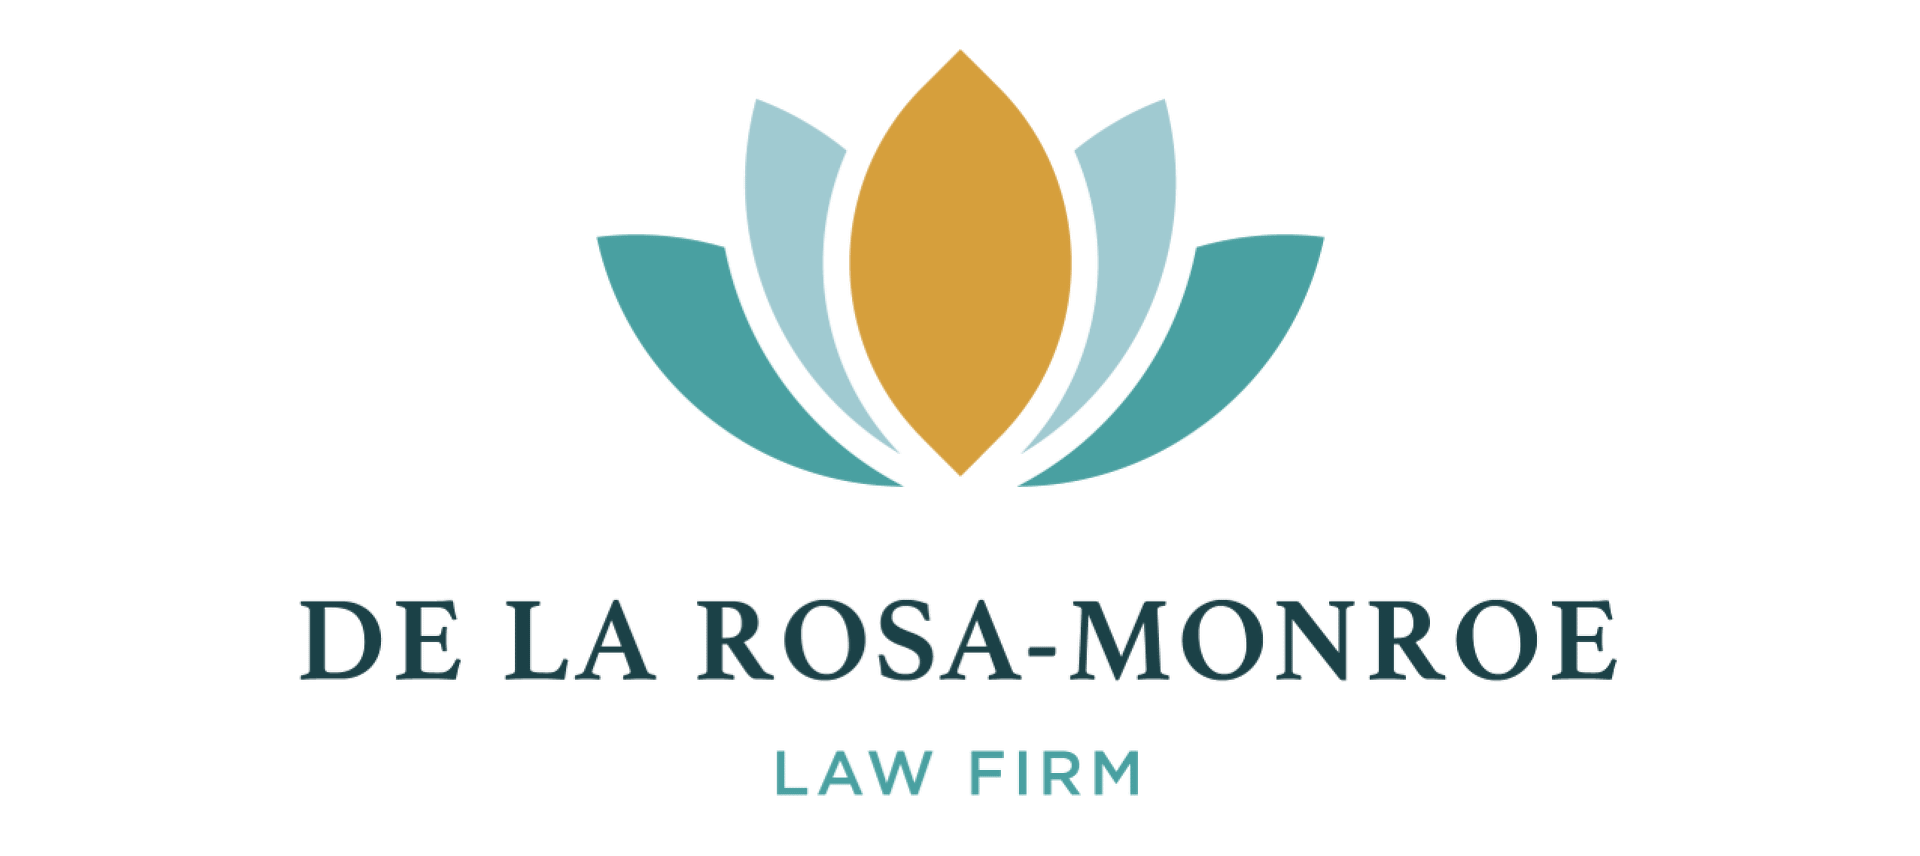 The De La Rosa-Monroe Law Firm, PLLC